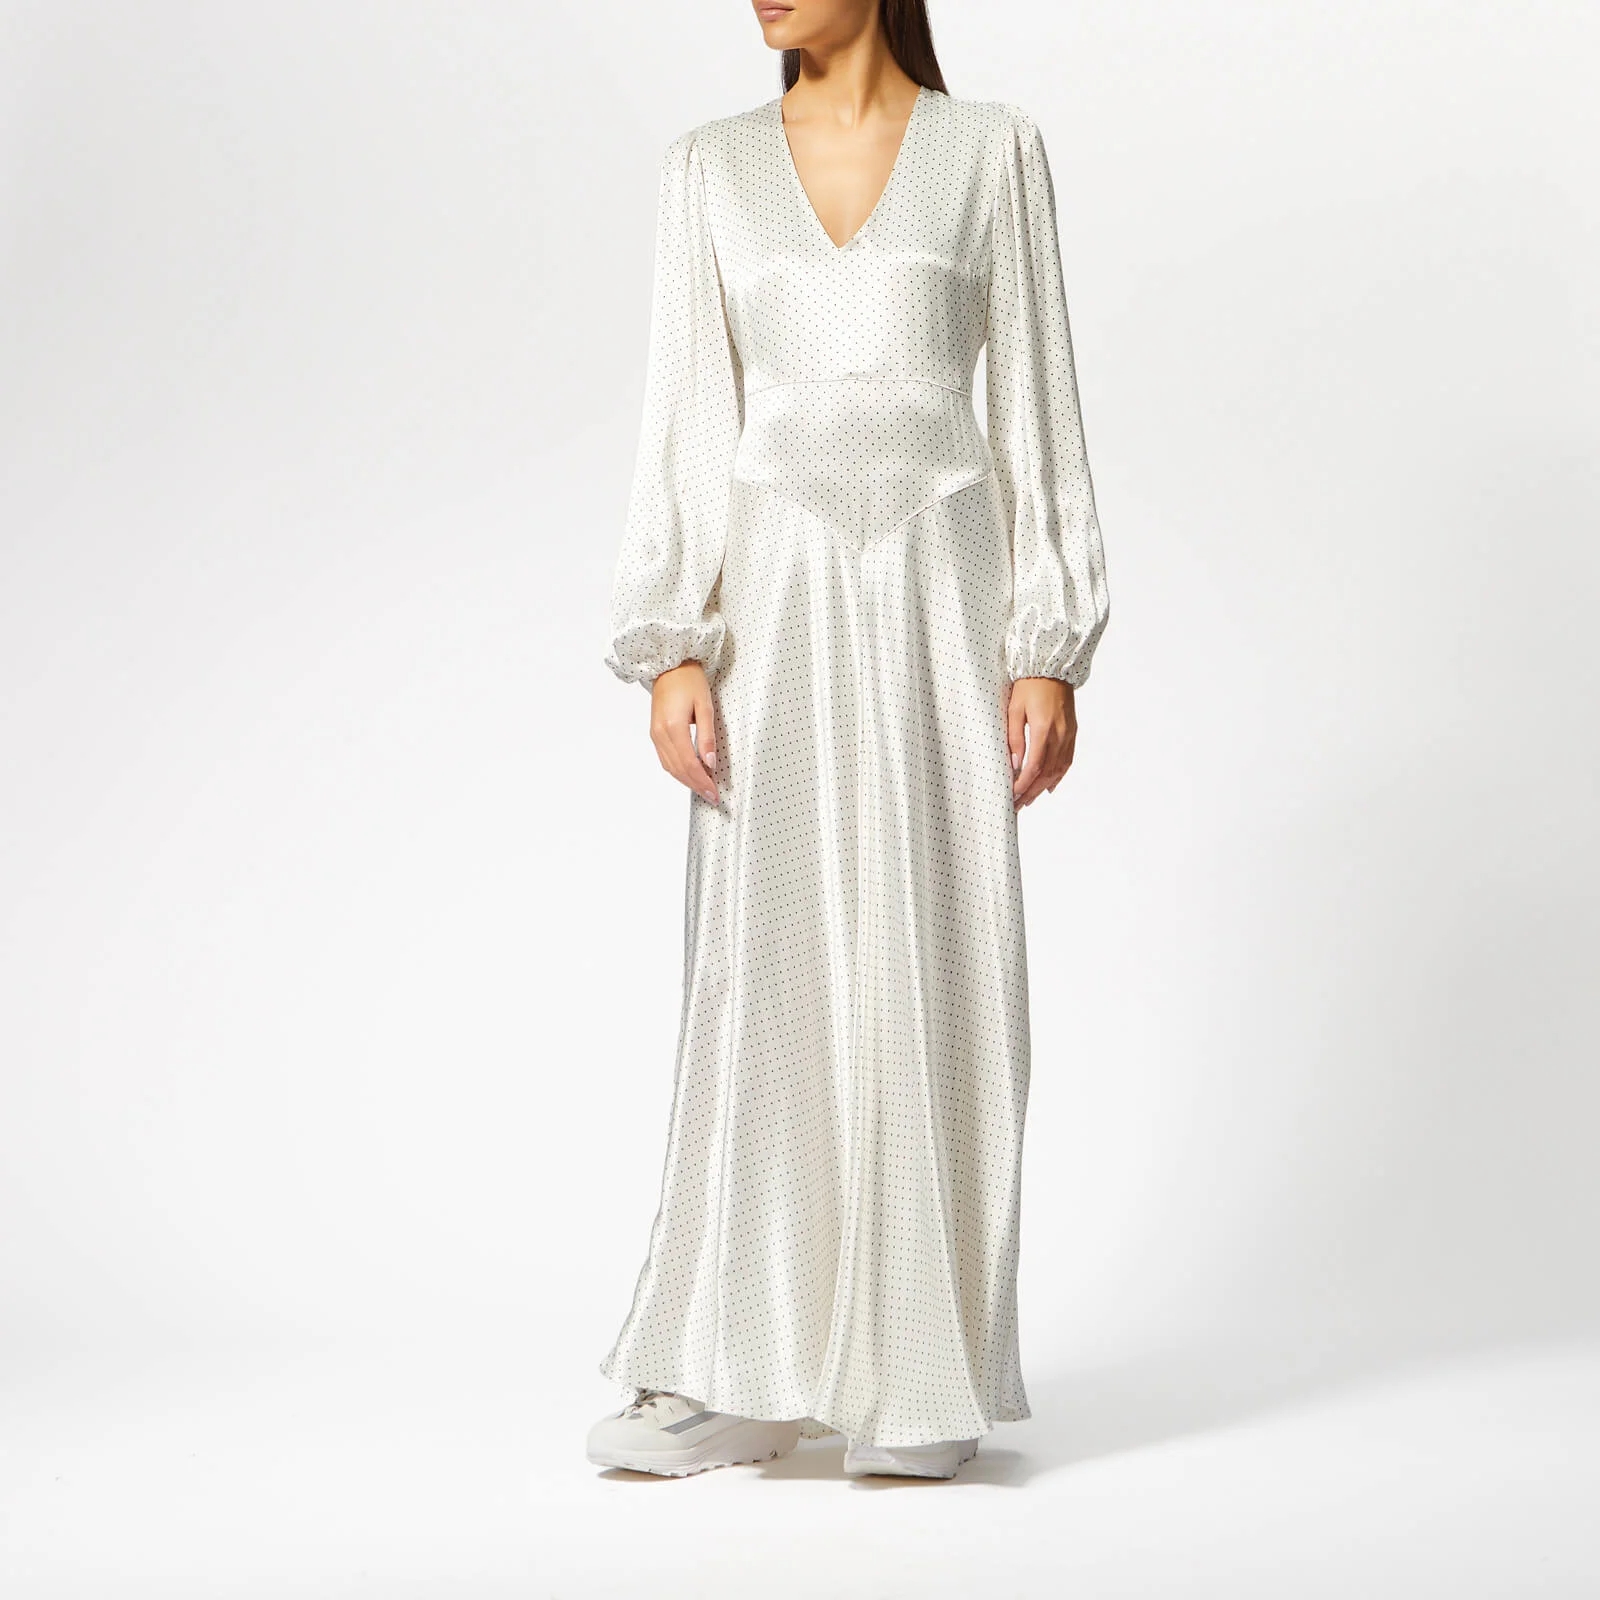 Ganni Women's Cameron Maxi Dress - Egret Image 1